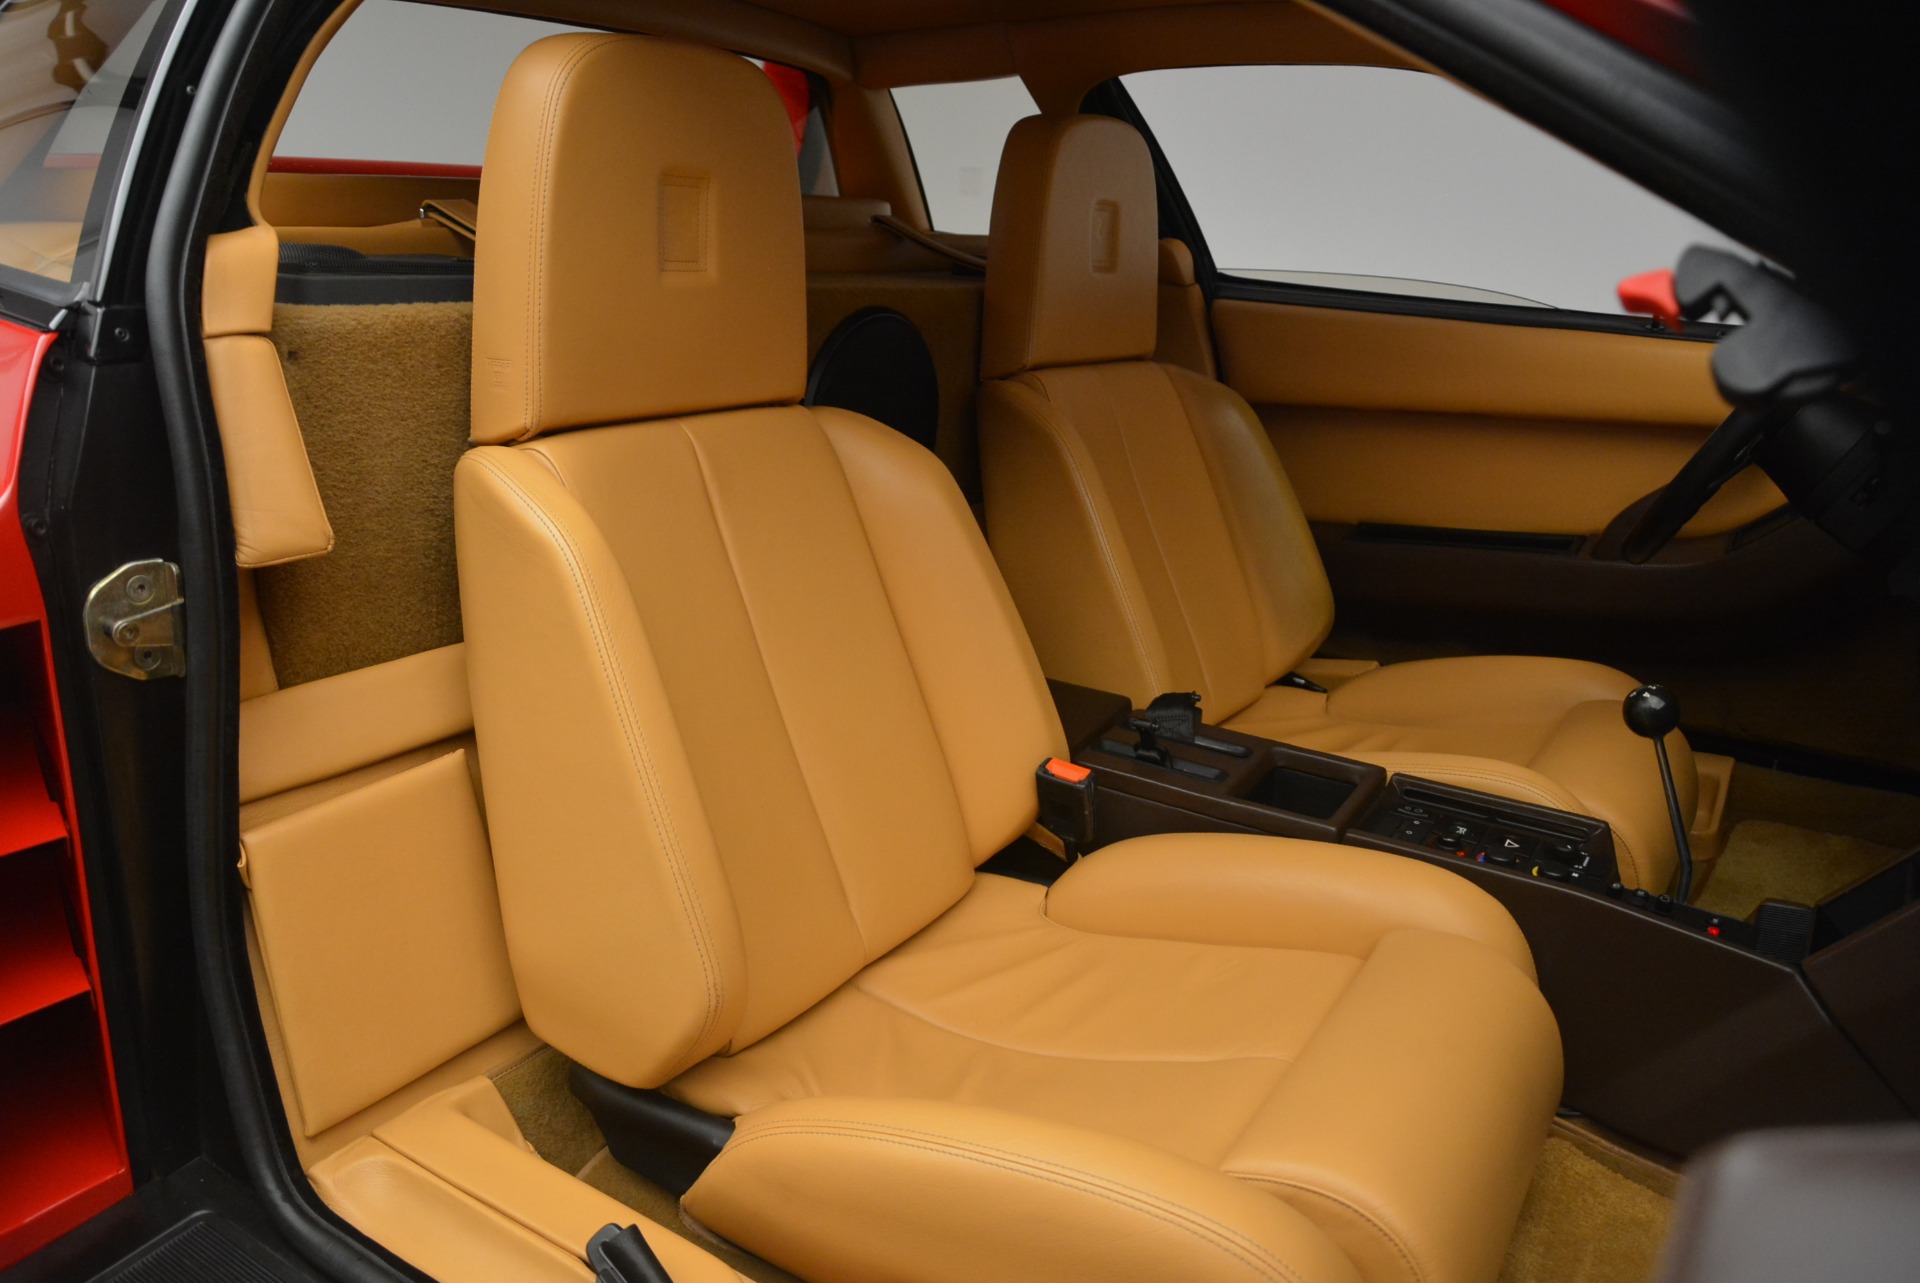 Ferrari Testarossa interior - Seats